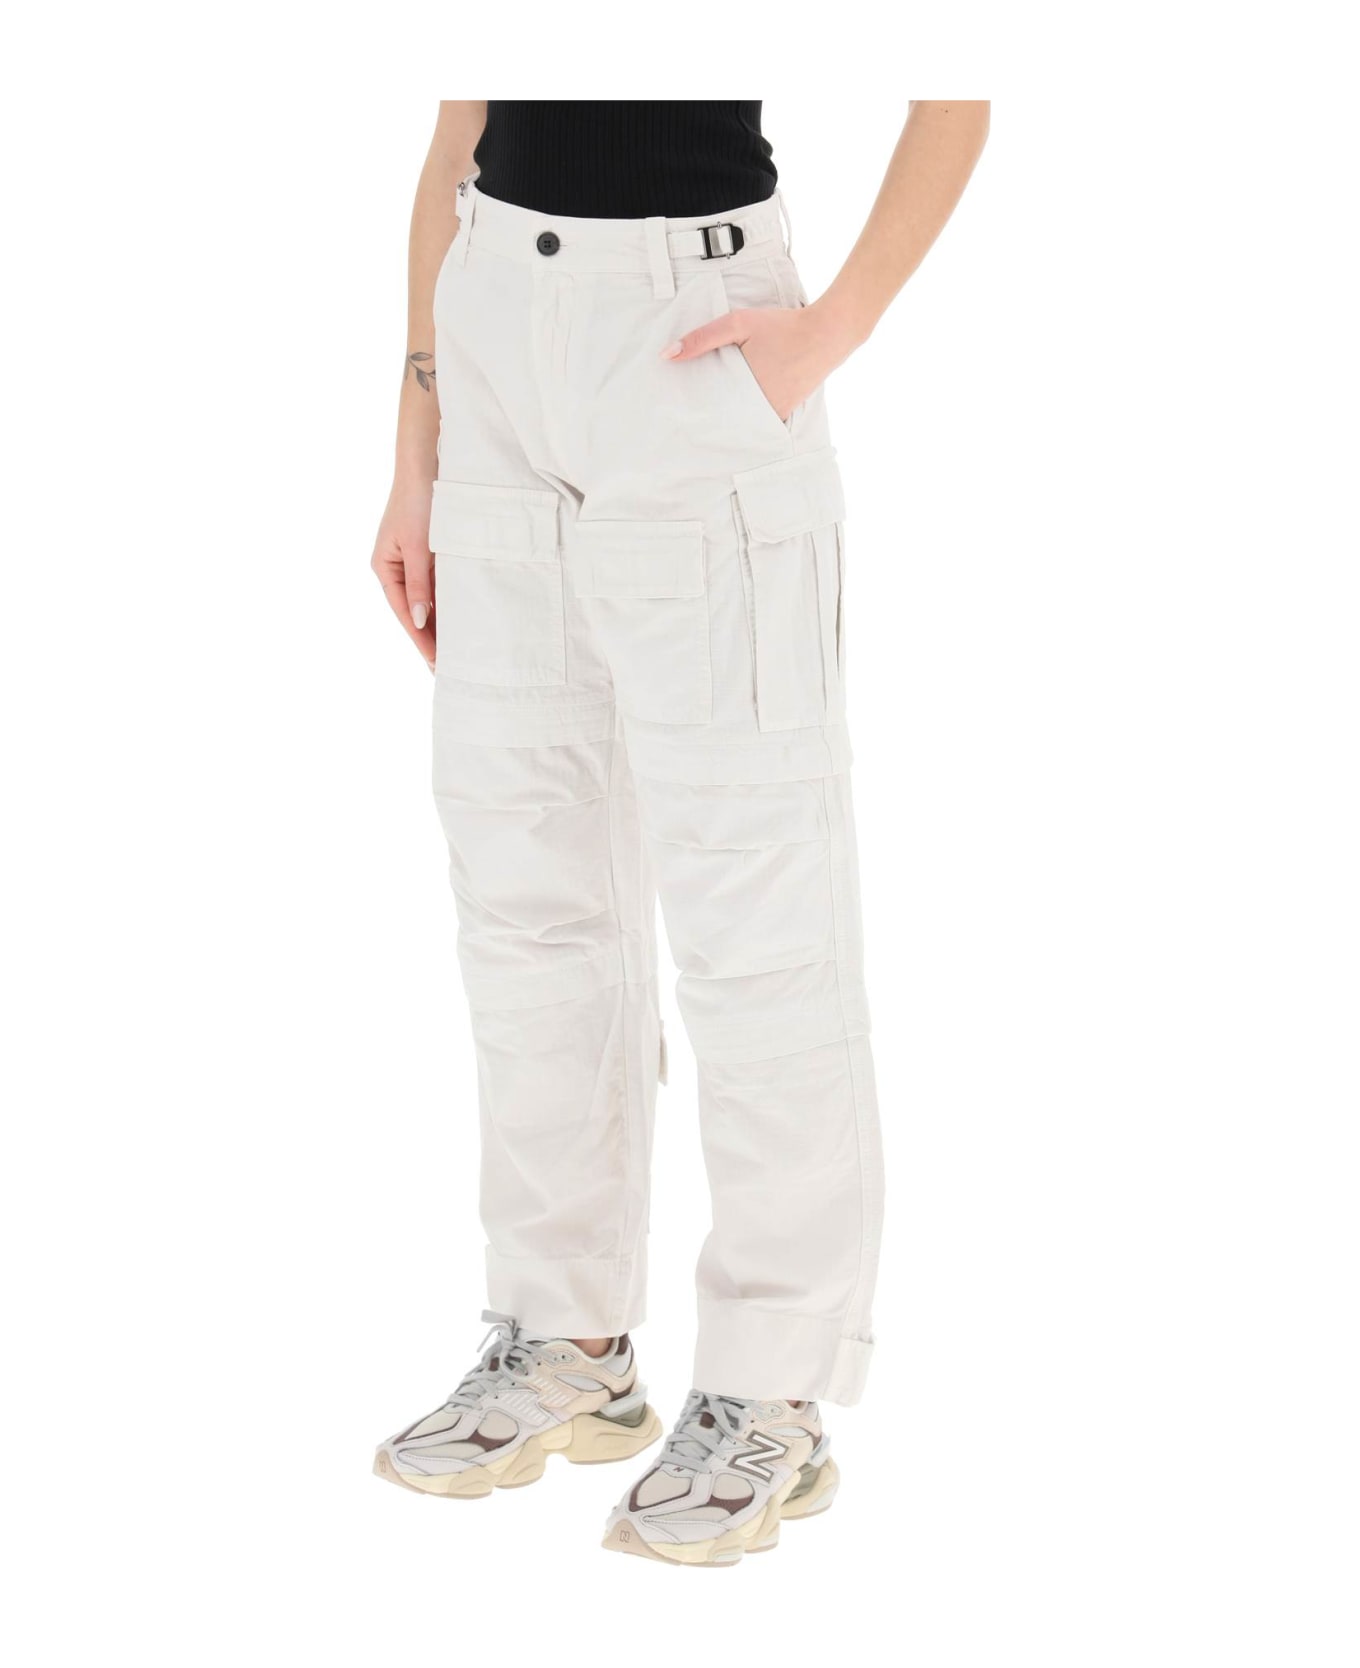 DARKPARK 'julia' Ripstop Cotton Cargo Pants - OFF WHITE (White)